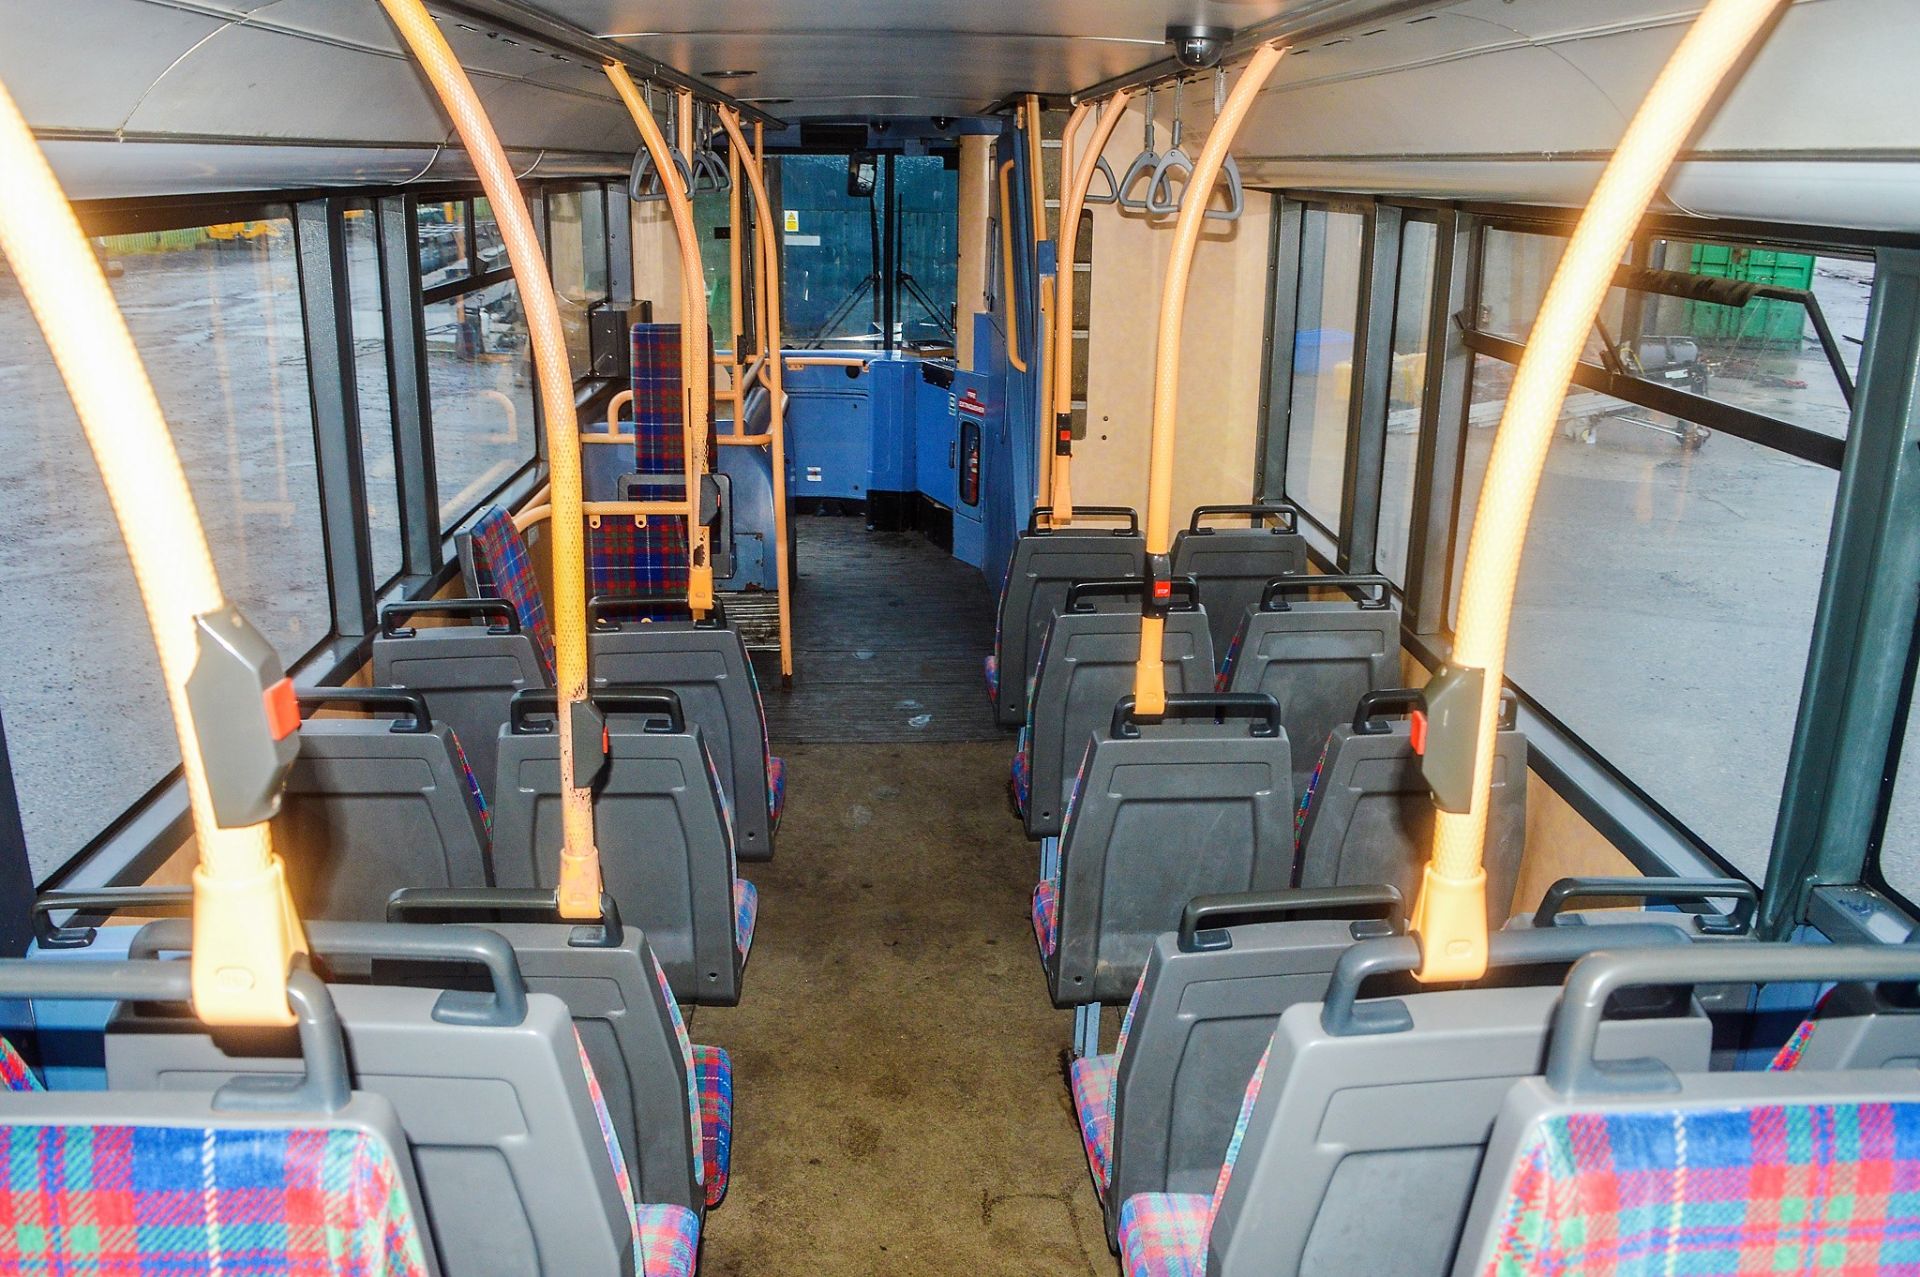 Alexander Dennis Trident Plaxton President 75 seat double deck service bus Registration Number: V532 - Image 8 of 12